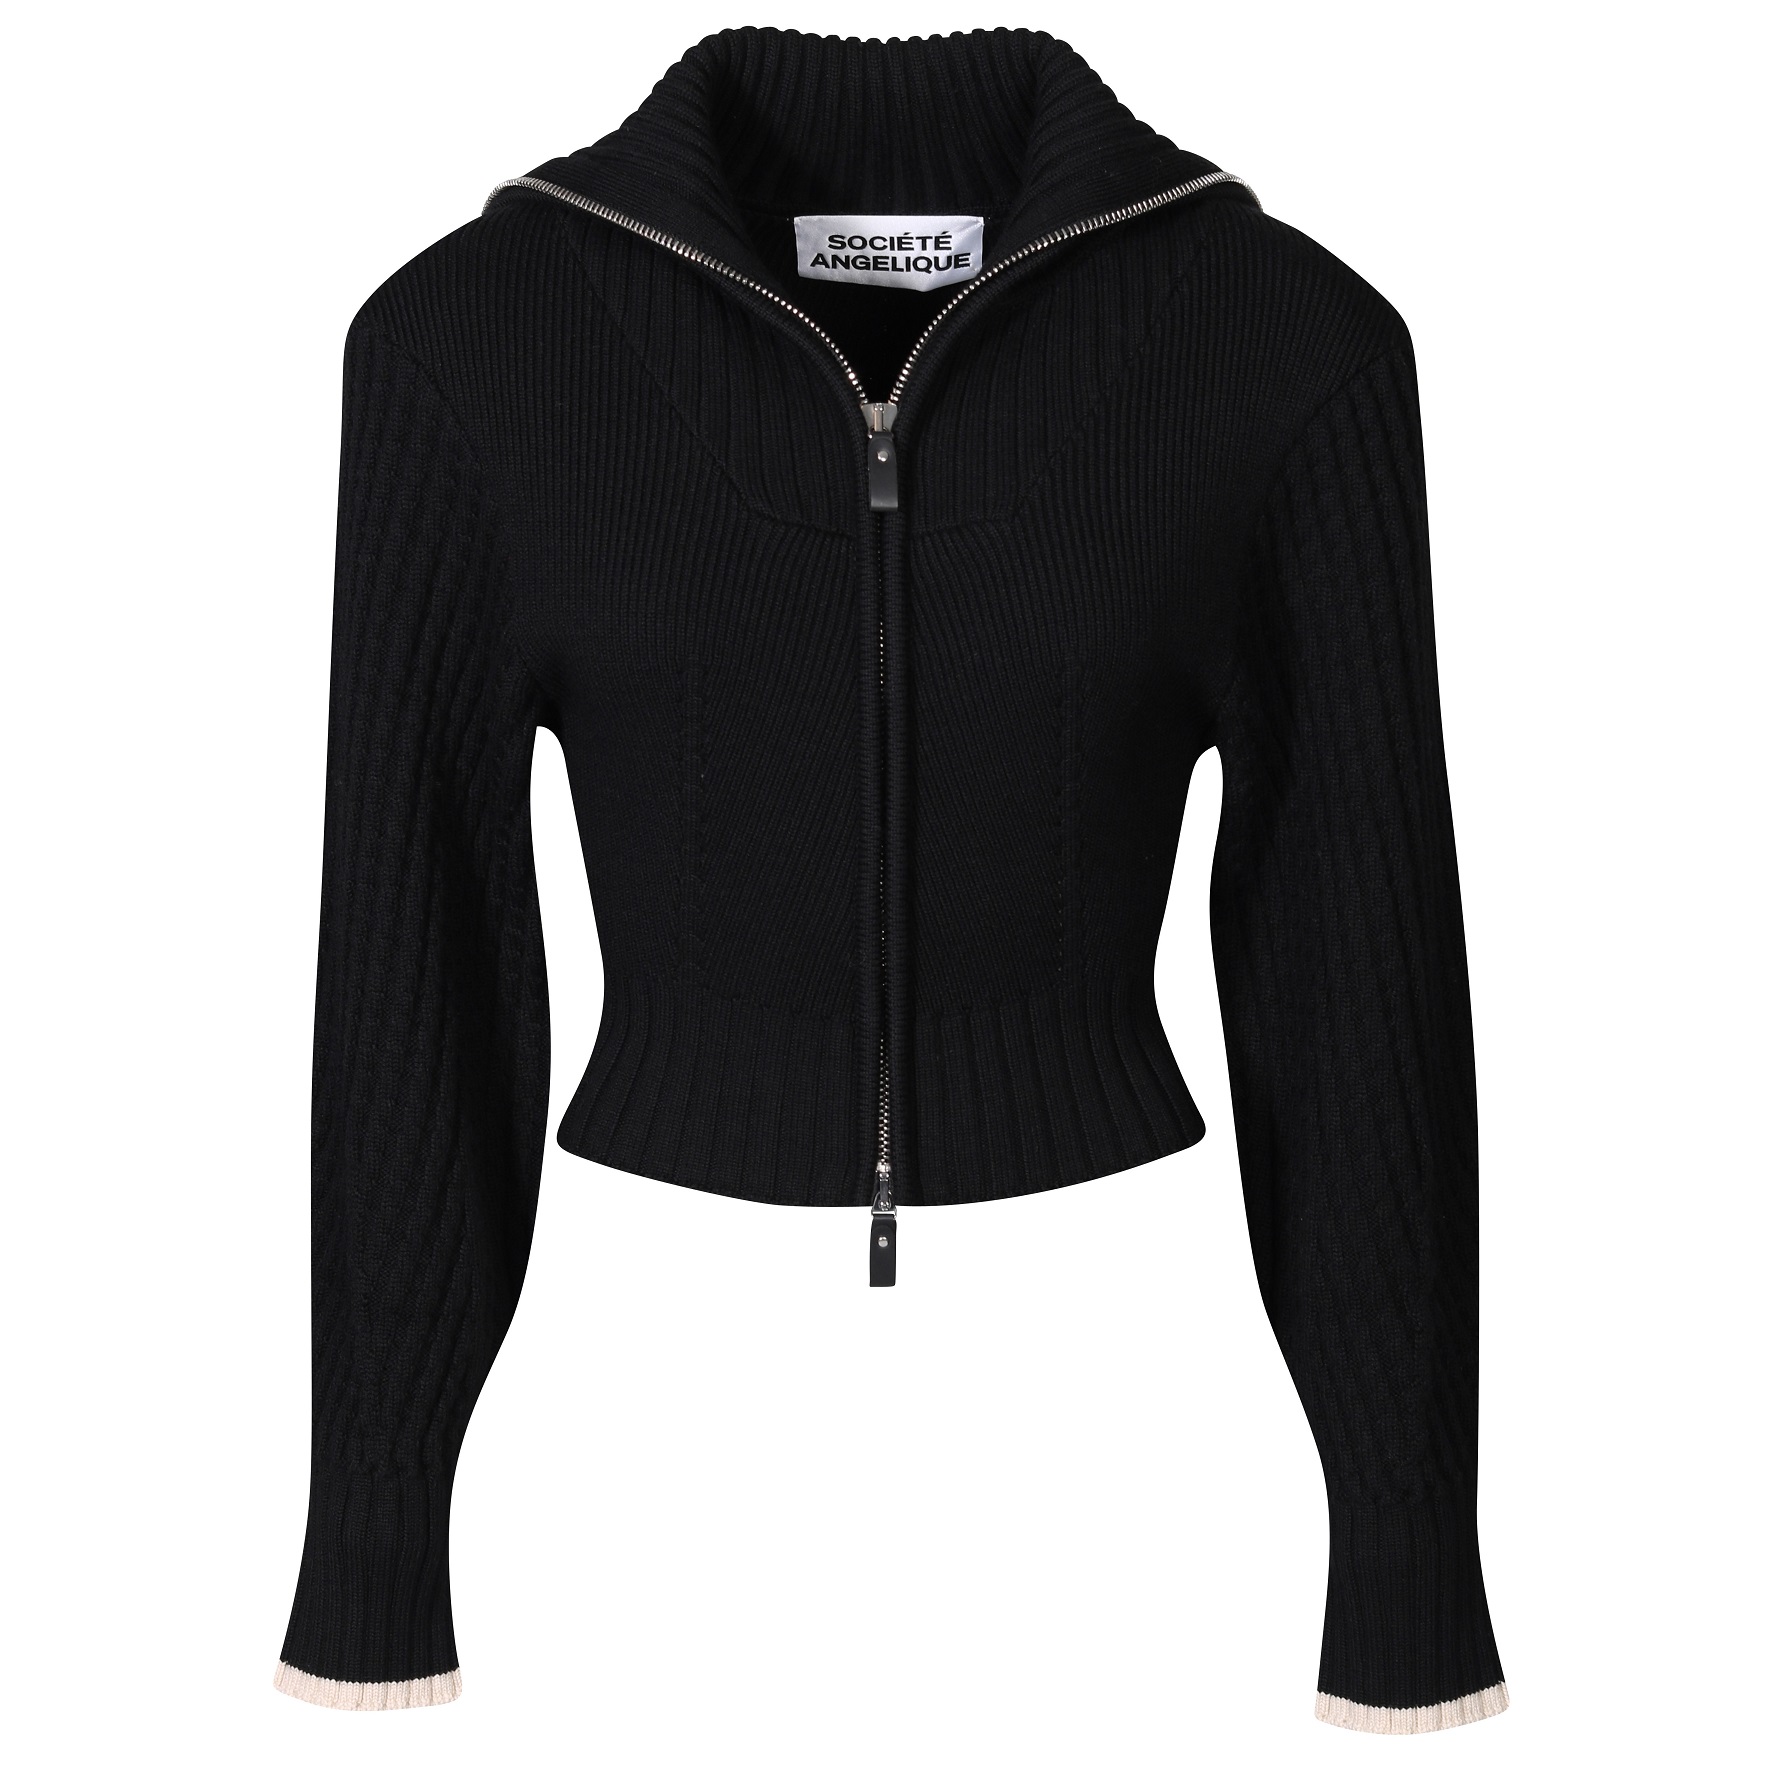 SOCIÉTÉ ANGELIQUE Merino Knit Zip Jacket with Big Shoulder 36